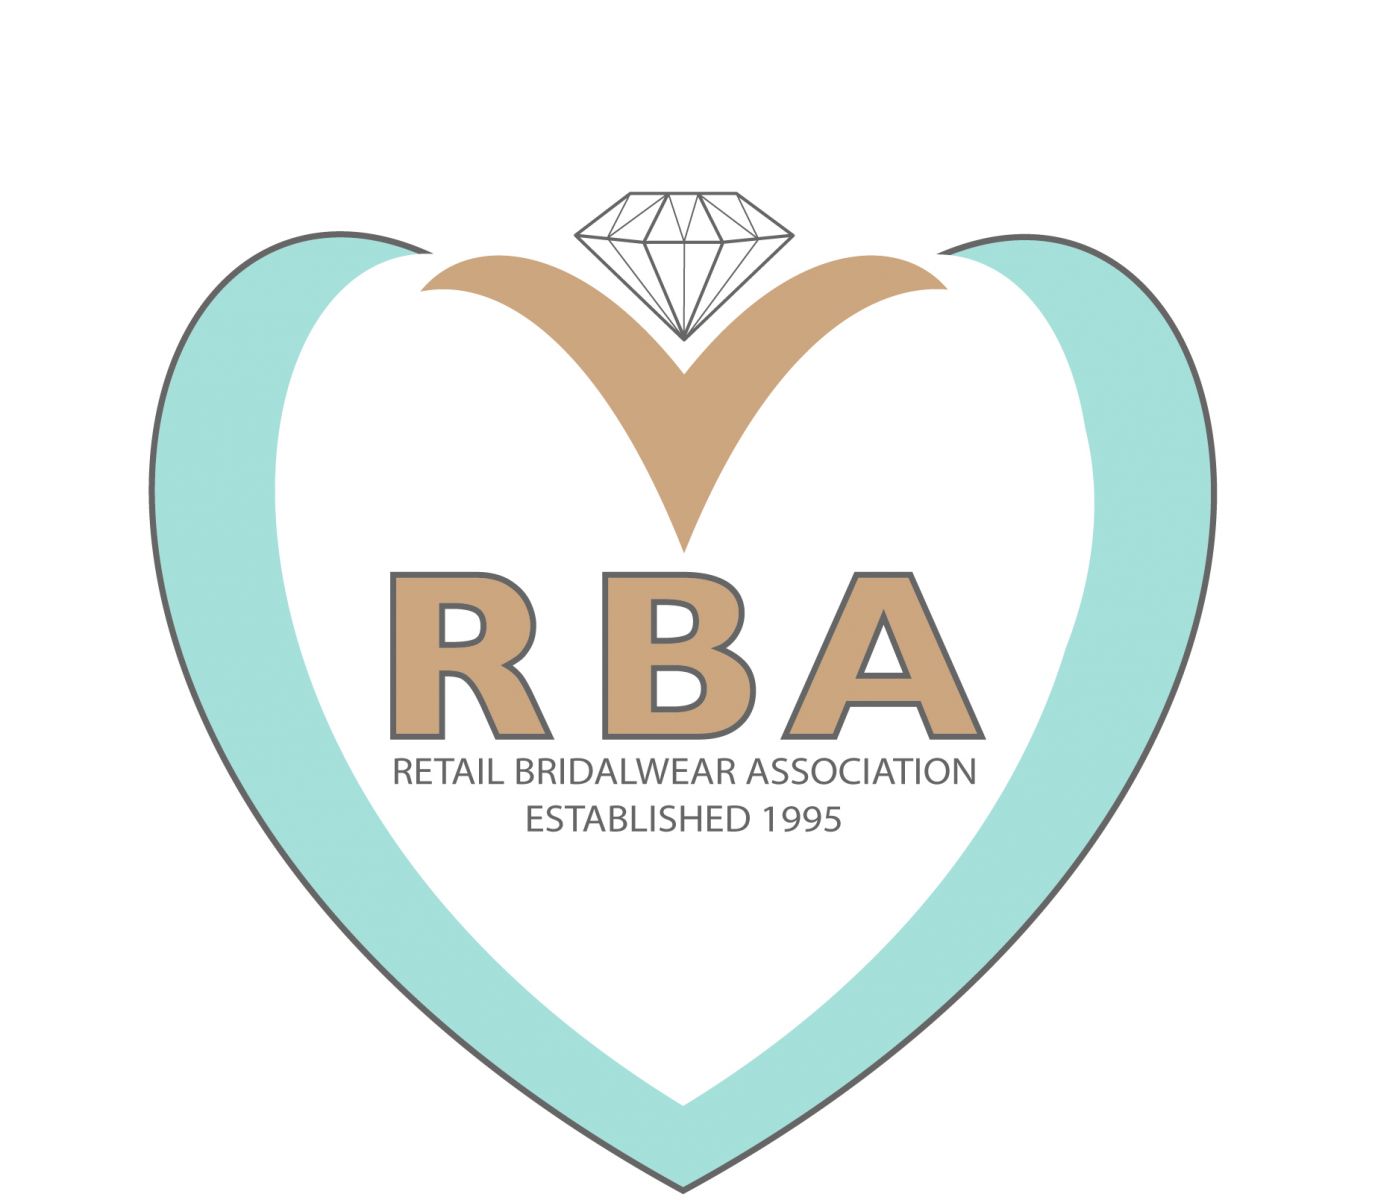 Retail Bridalwear Association National Accreditation